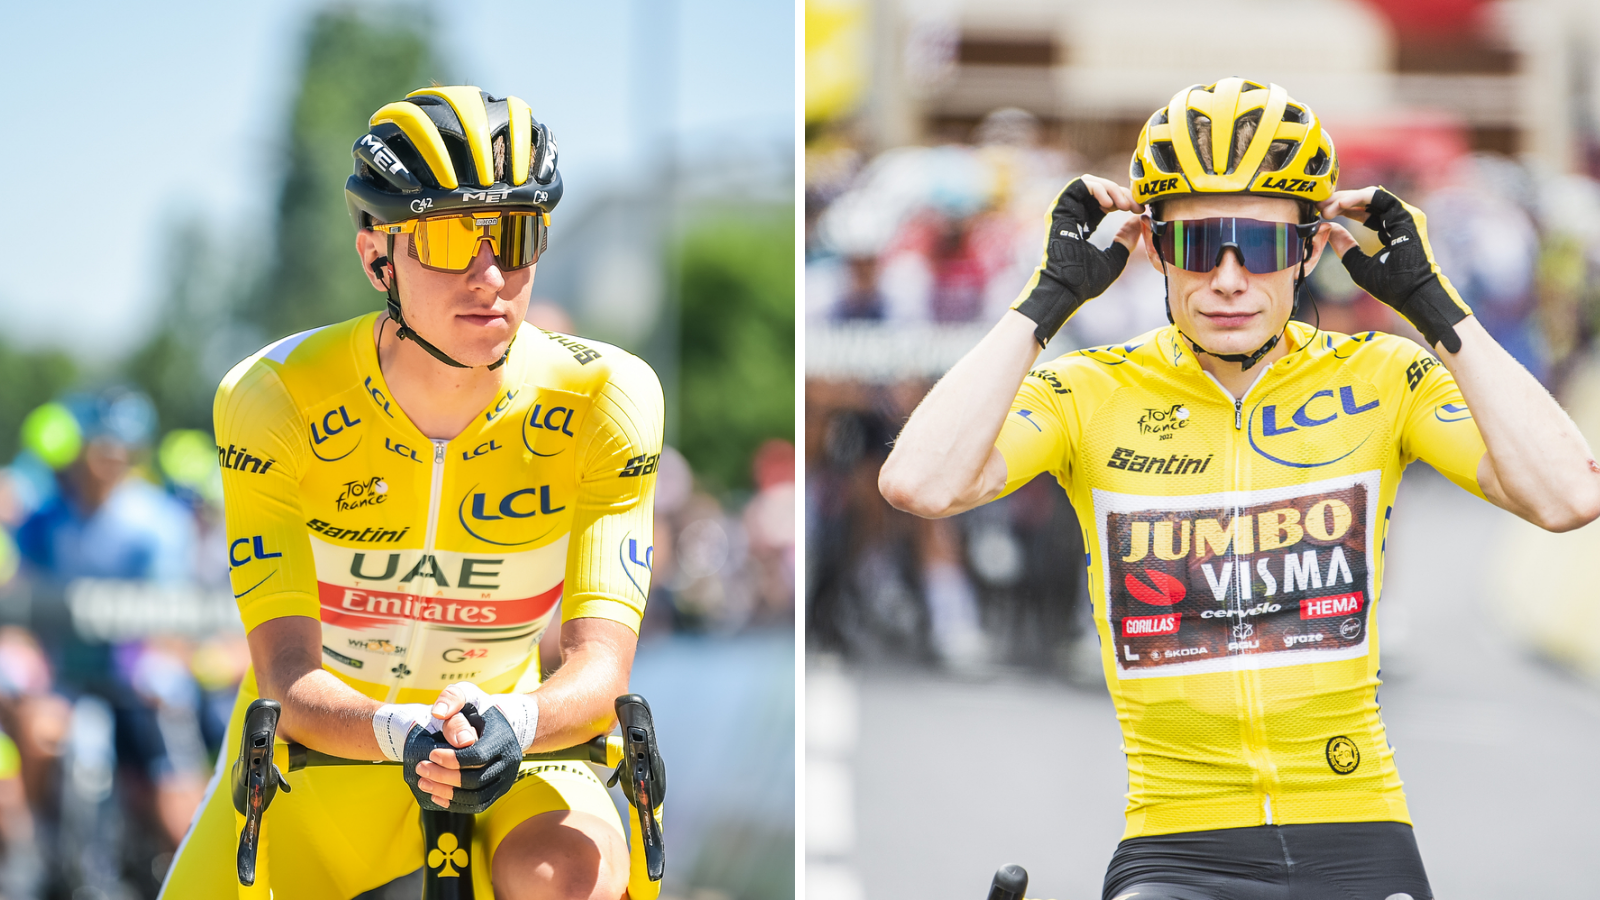 Montage of Tour de France winners Tadej Pogacar (2020, 2021) and Jonas Vingegaard (2022) in their yellow jerseys